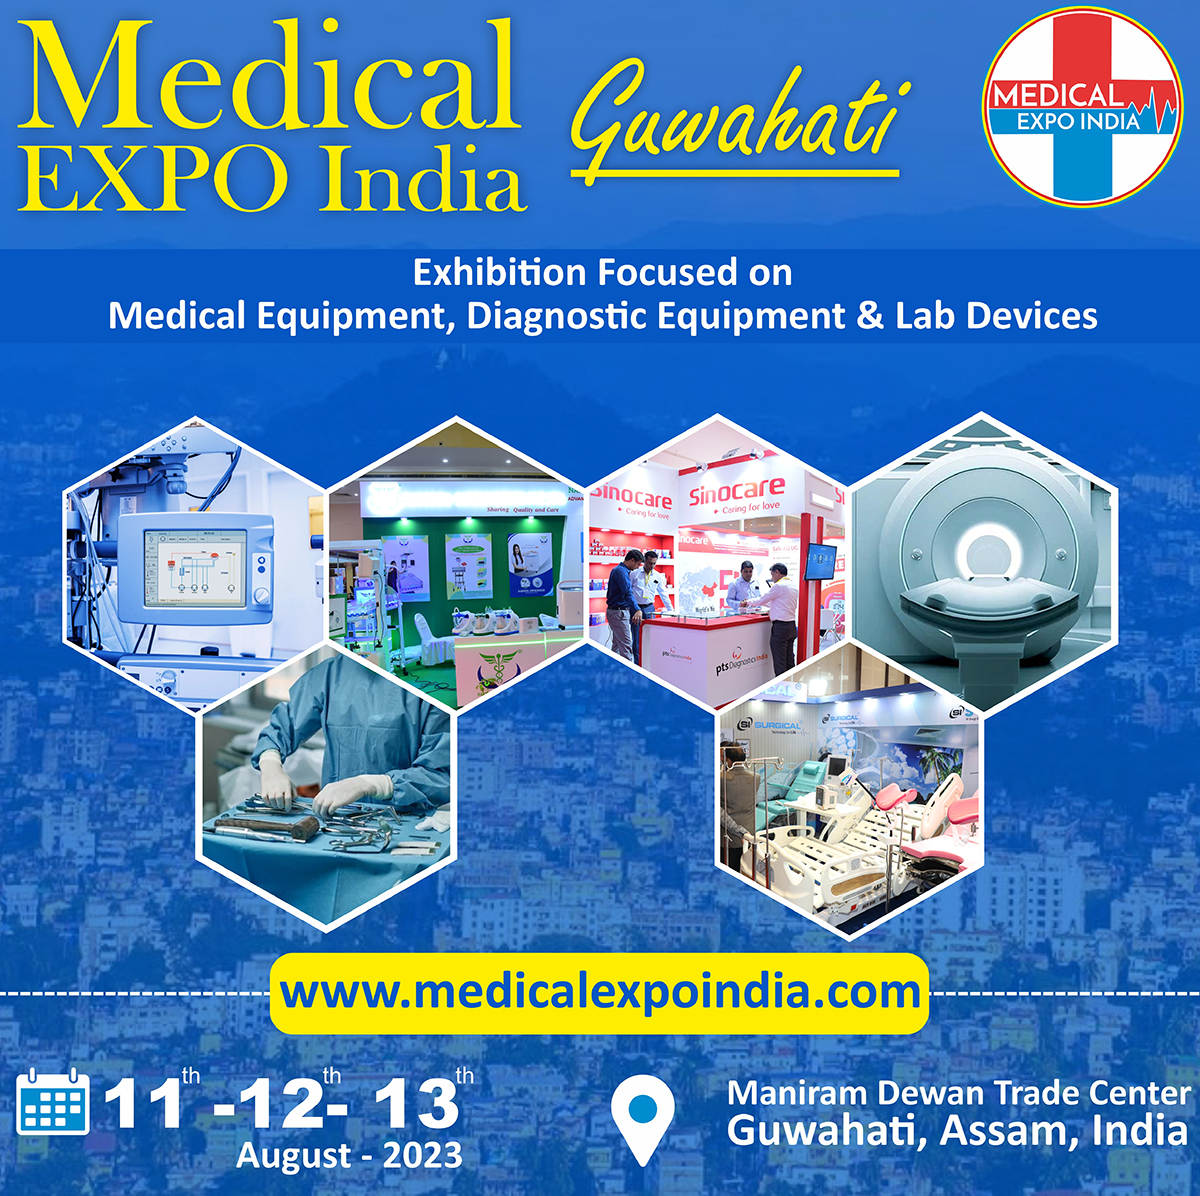  Medical Expo India Guwahati 2023